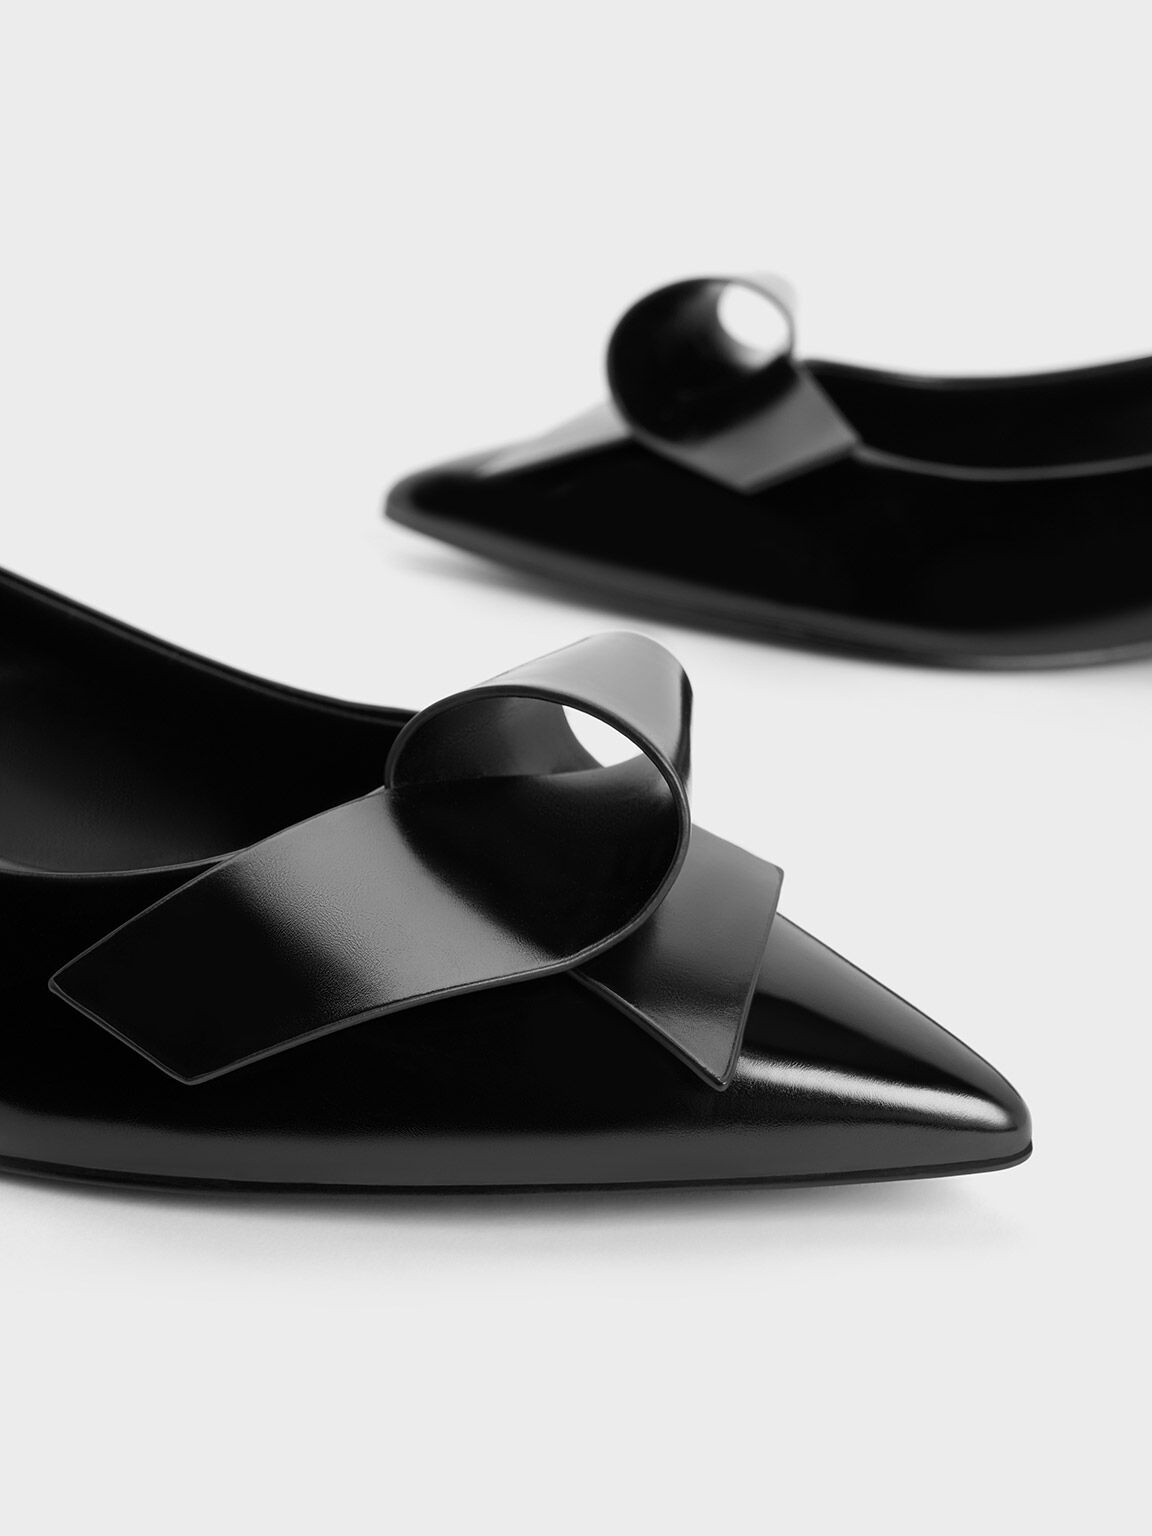 Sculptural Knot Pointed-Toe Flats, Black Boxed, hi-res